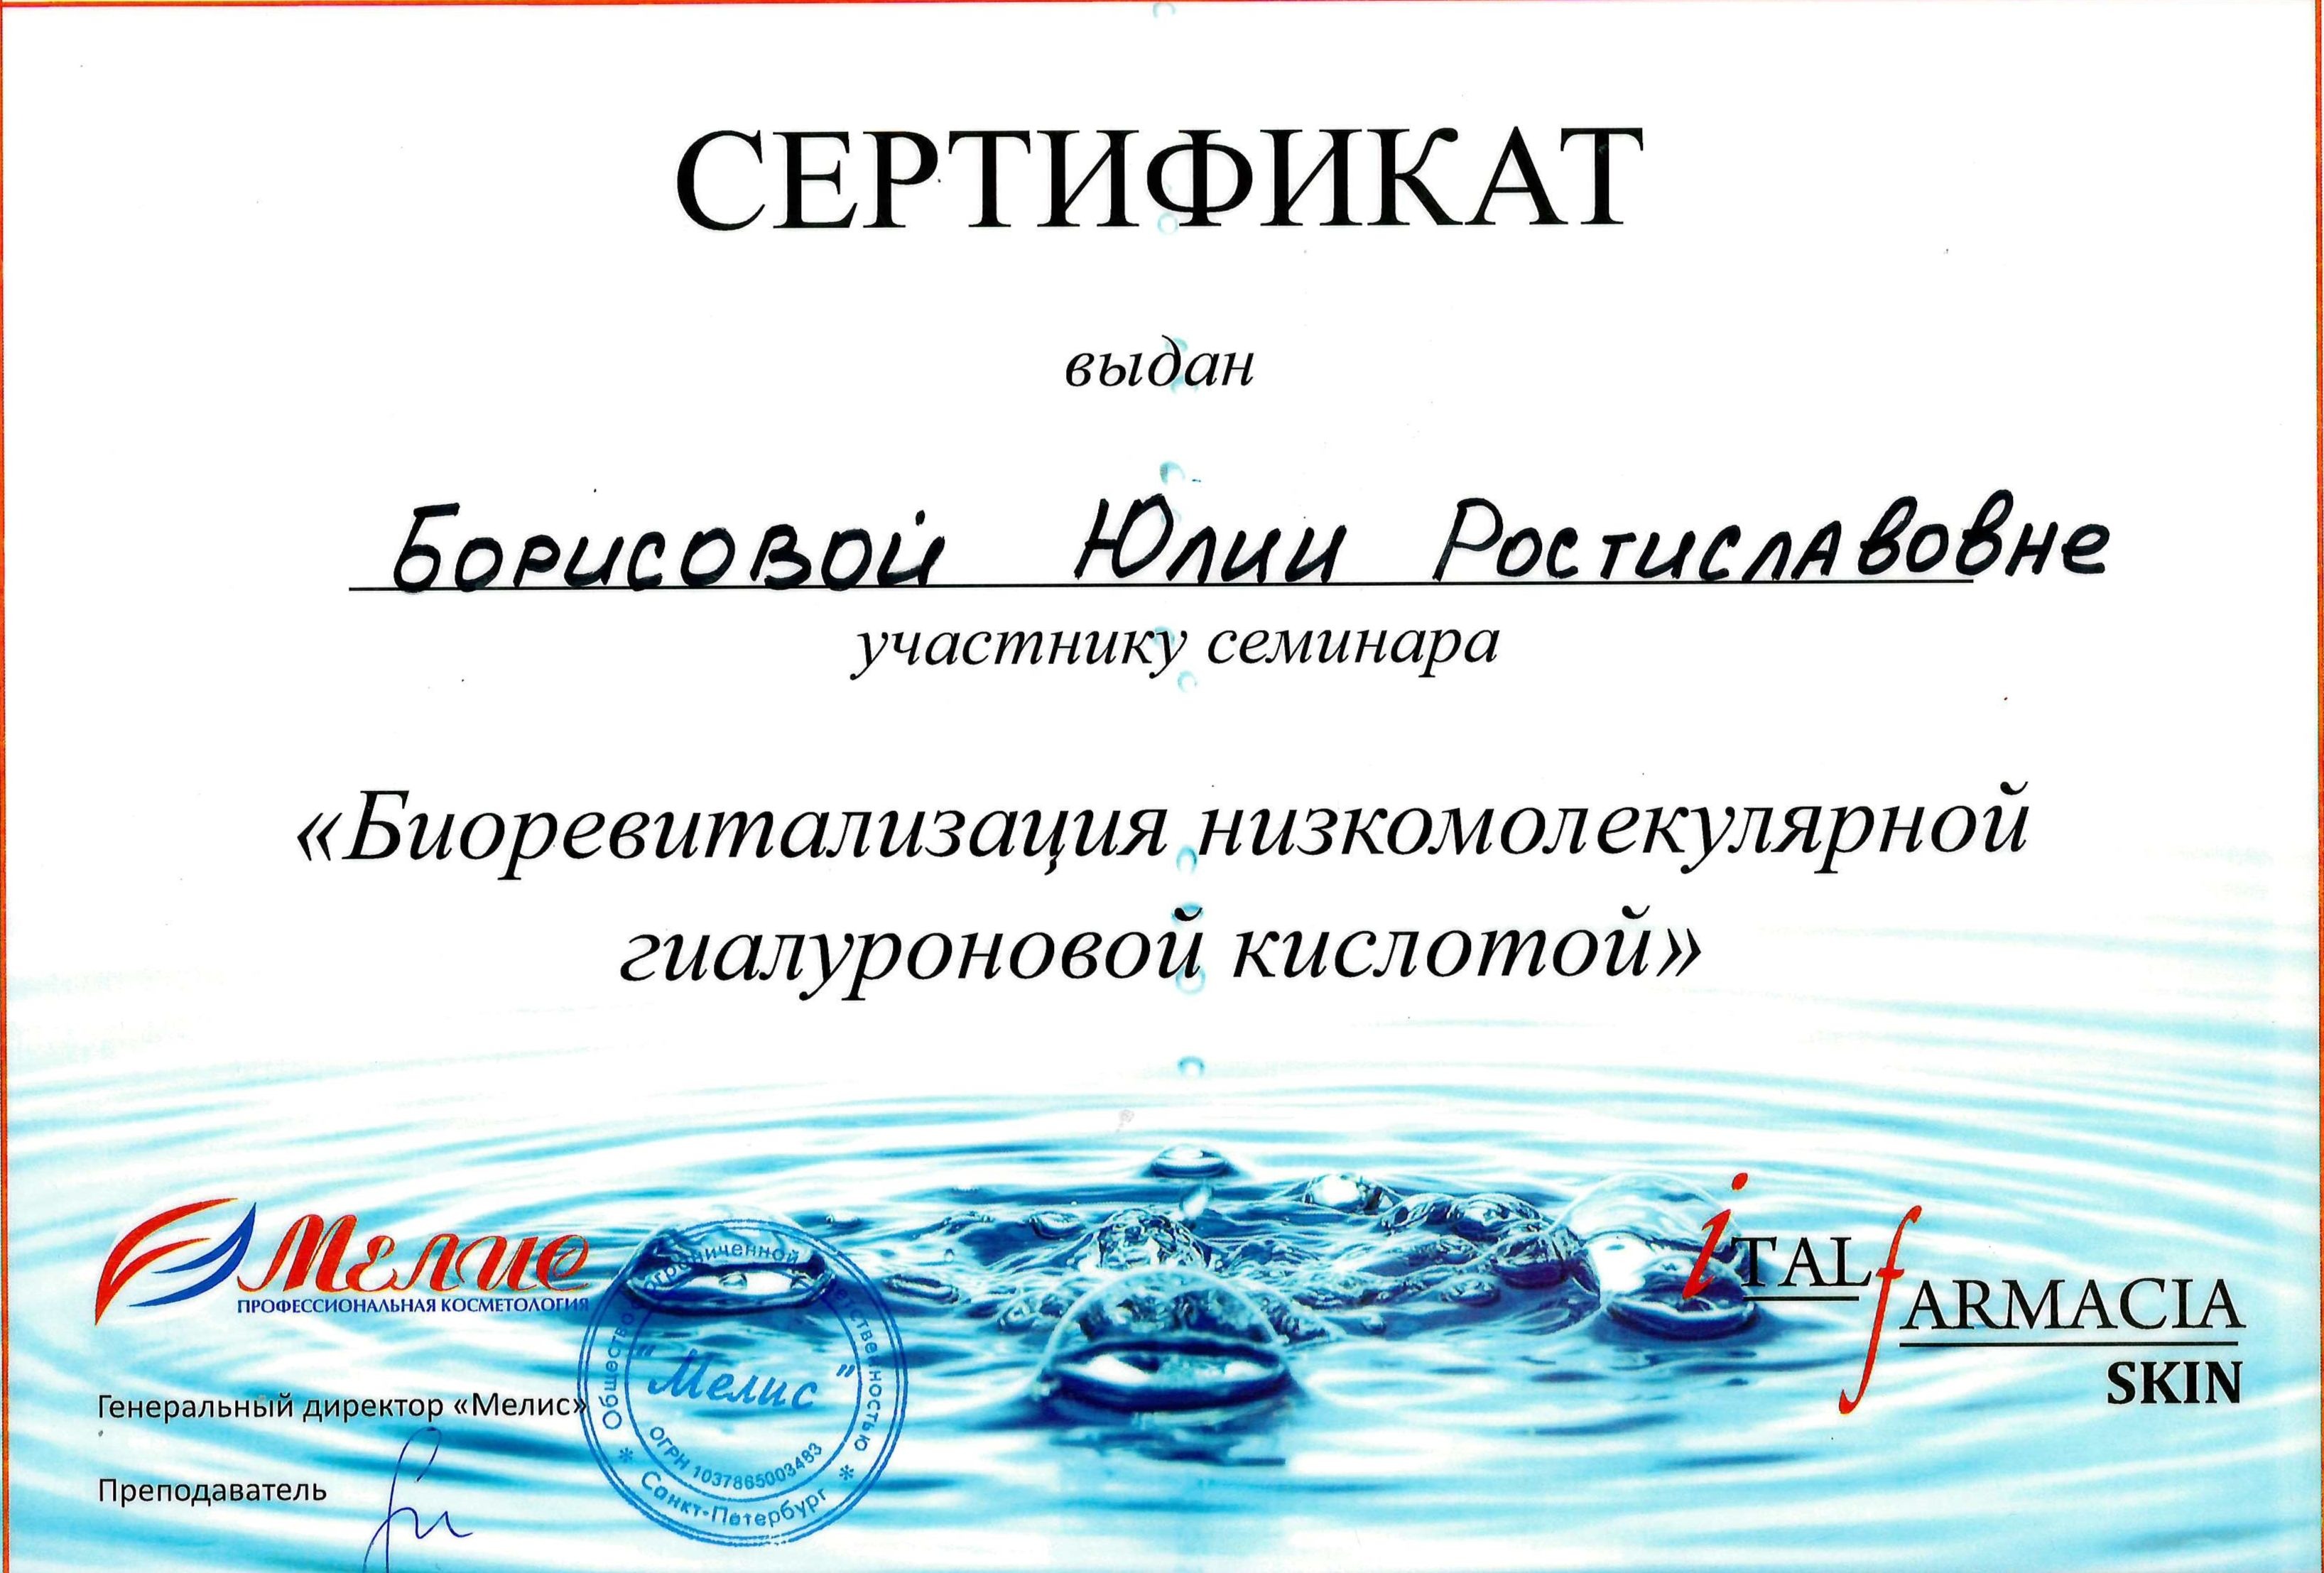 Сертификат — Семинар «Биоревитализация». Григорьева Юлия Ростиславовна